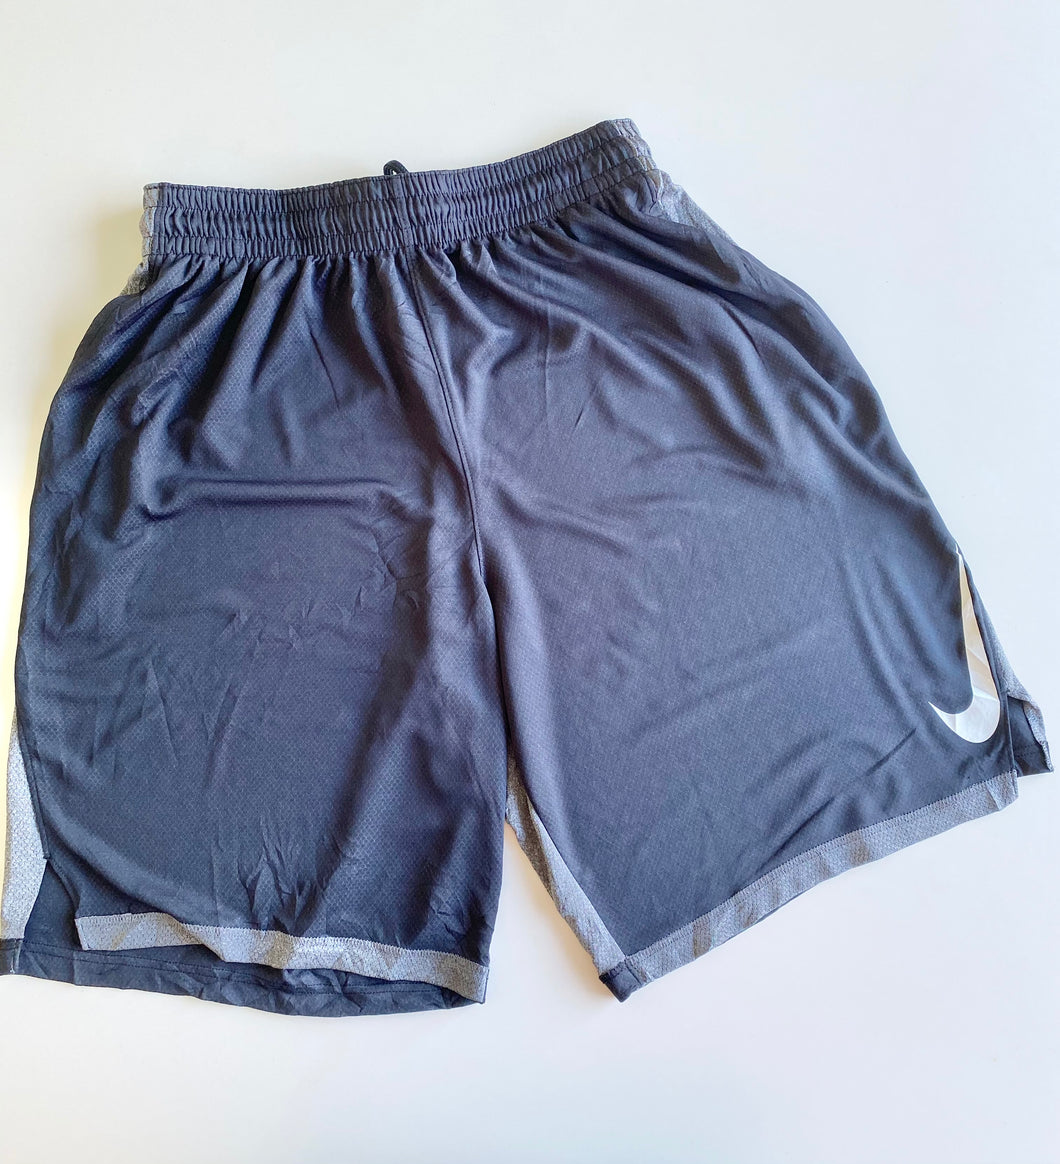 Nike shorts (L)